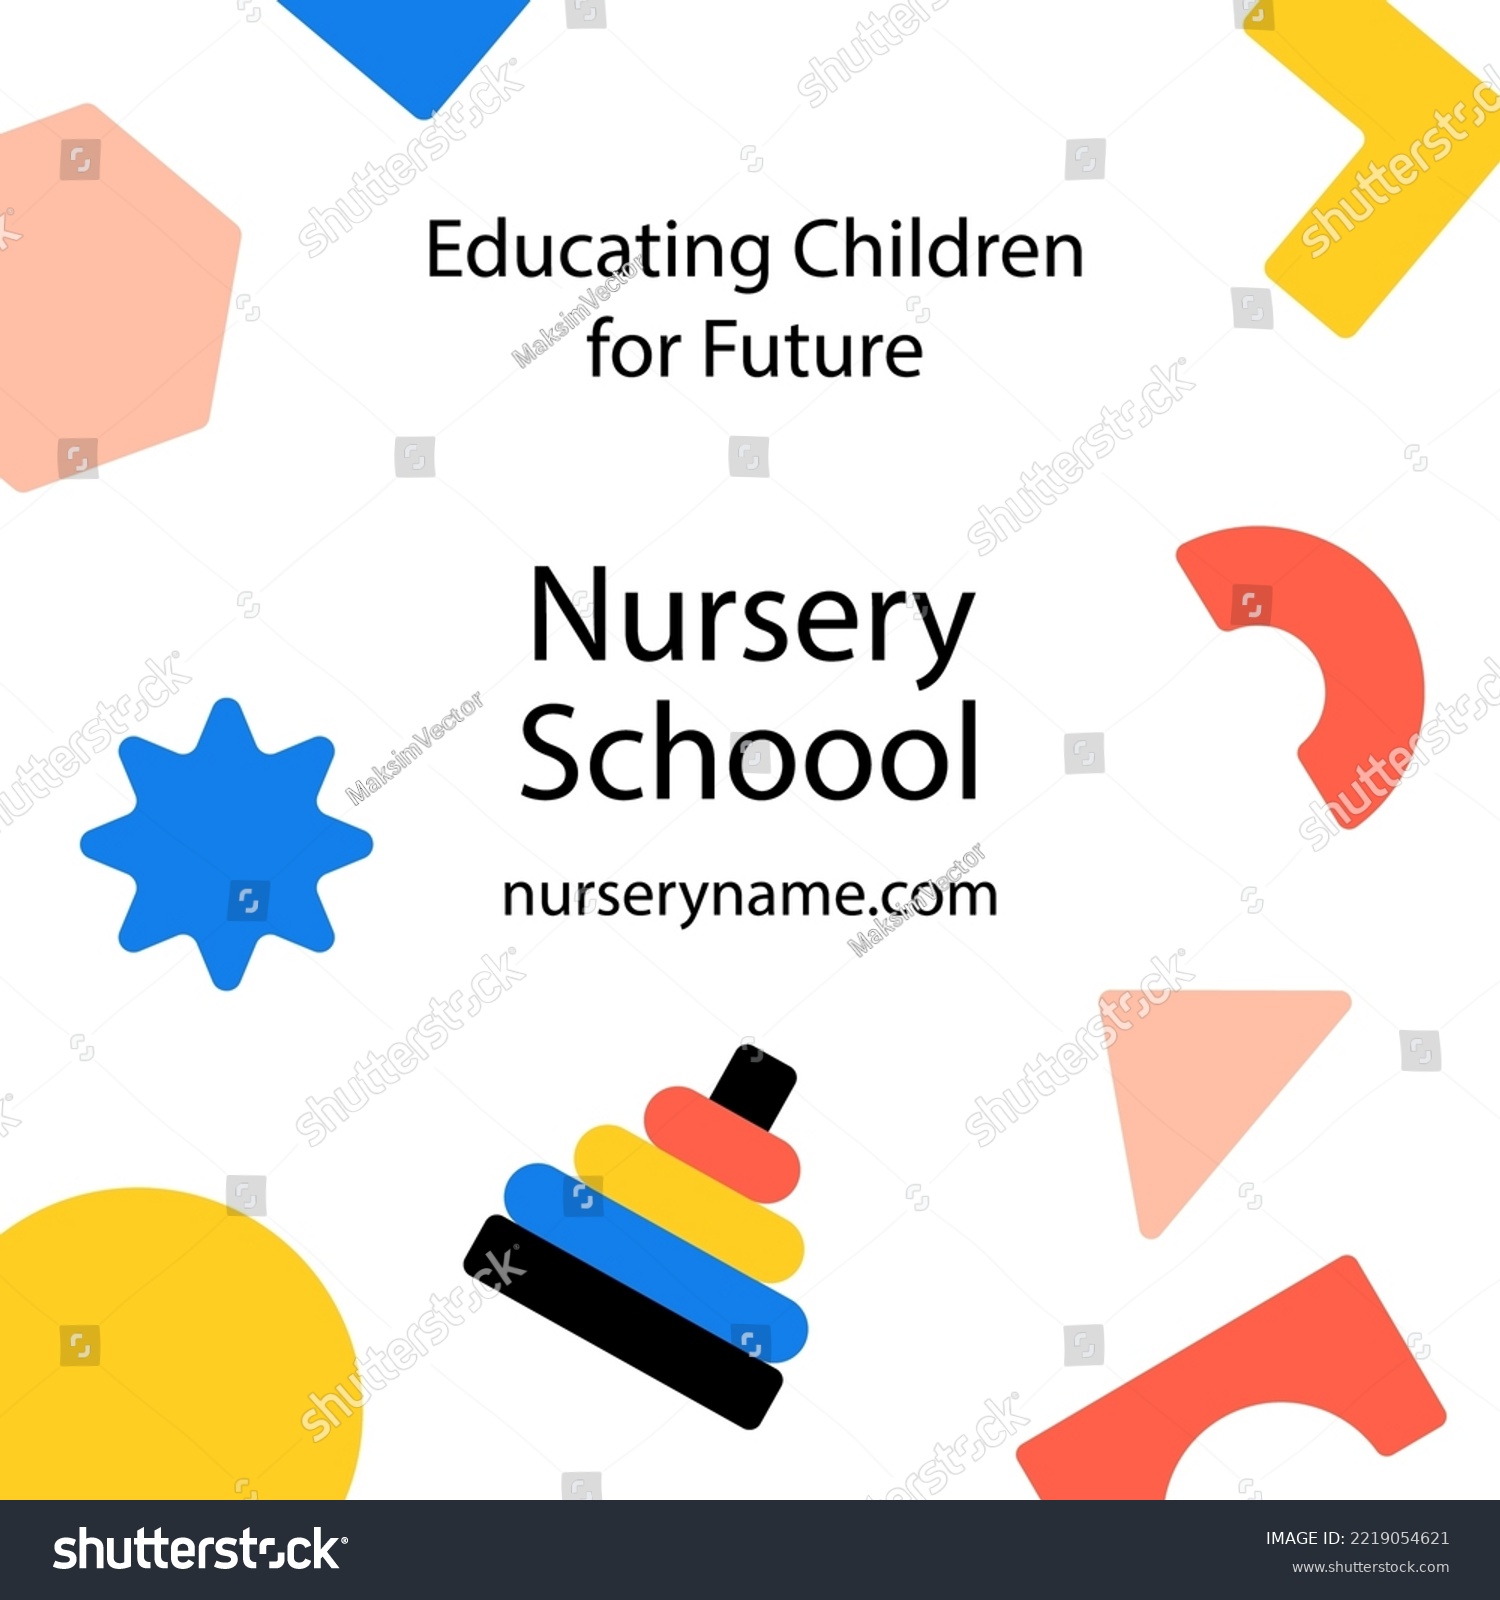 Flat design nursery school posts Vector illustration. #2219054621